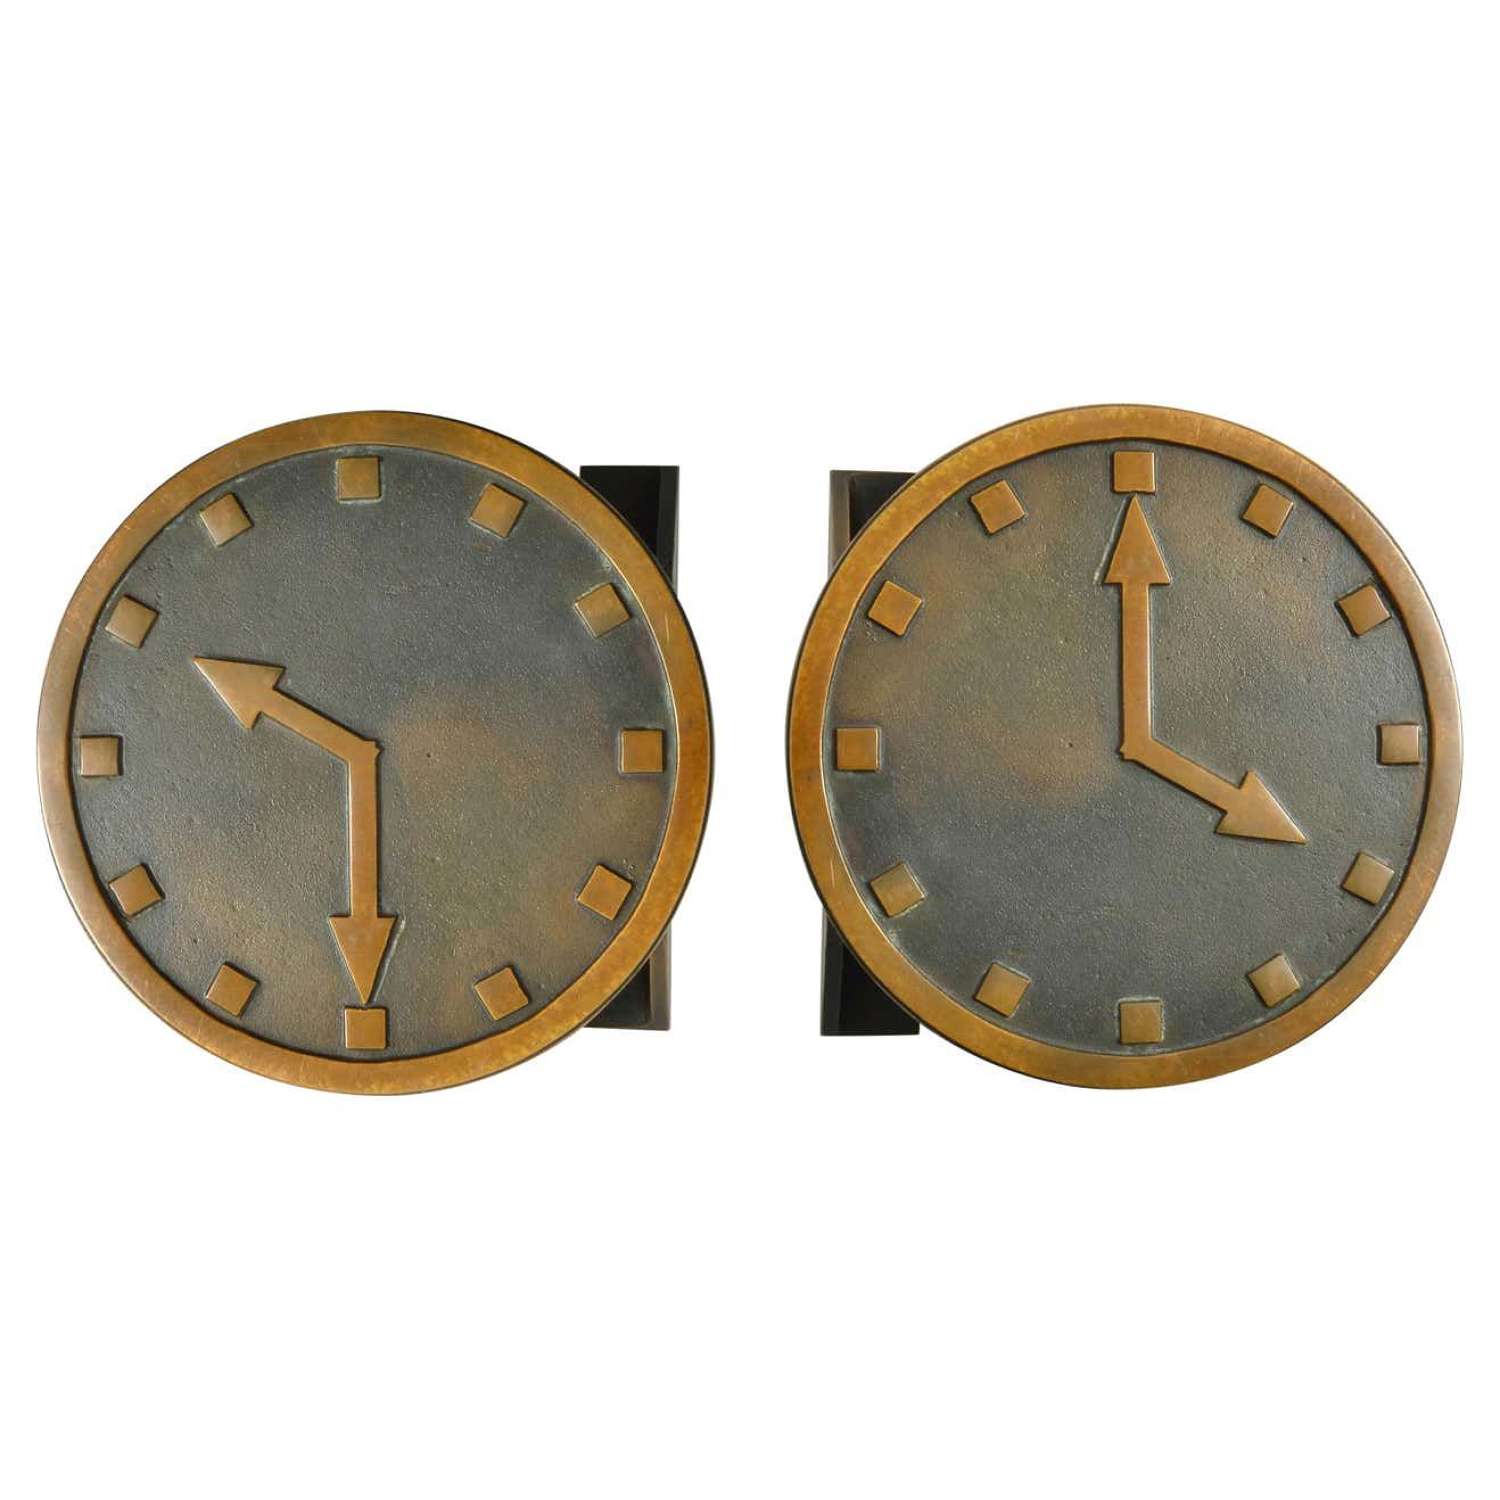 Pair of Bronze Push and Pull Door Handles as Clocks